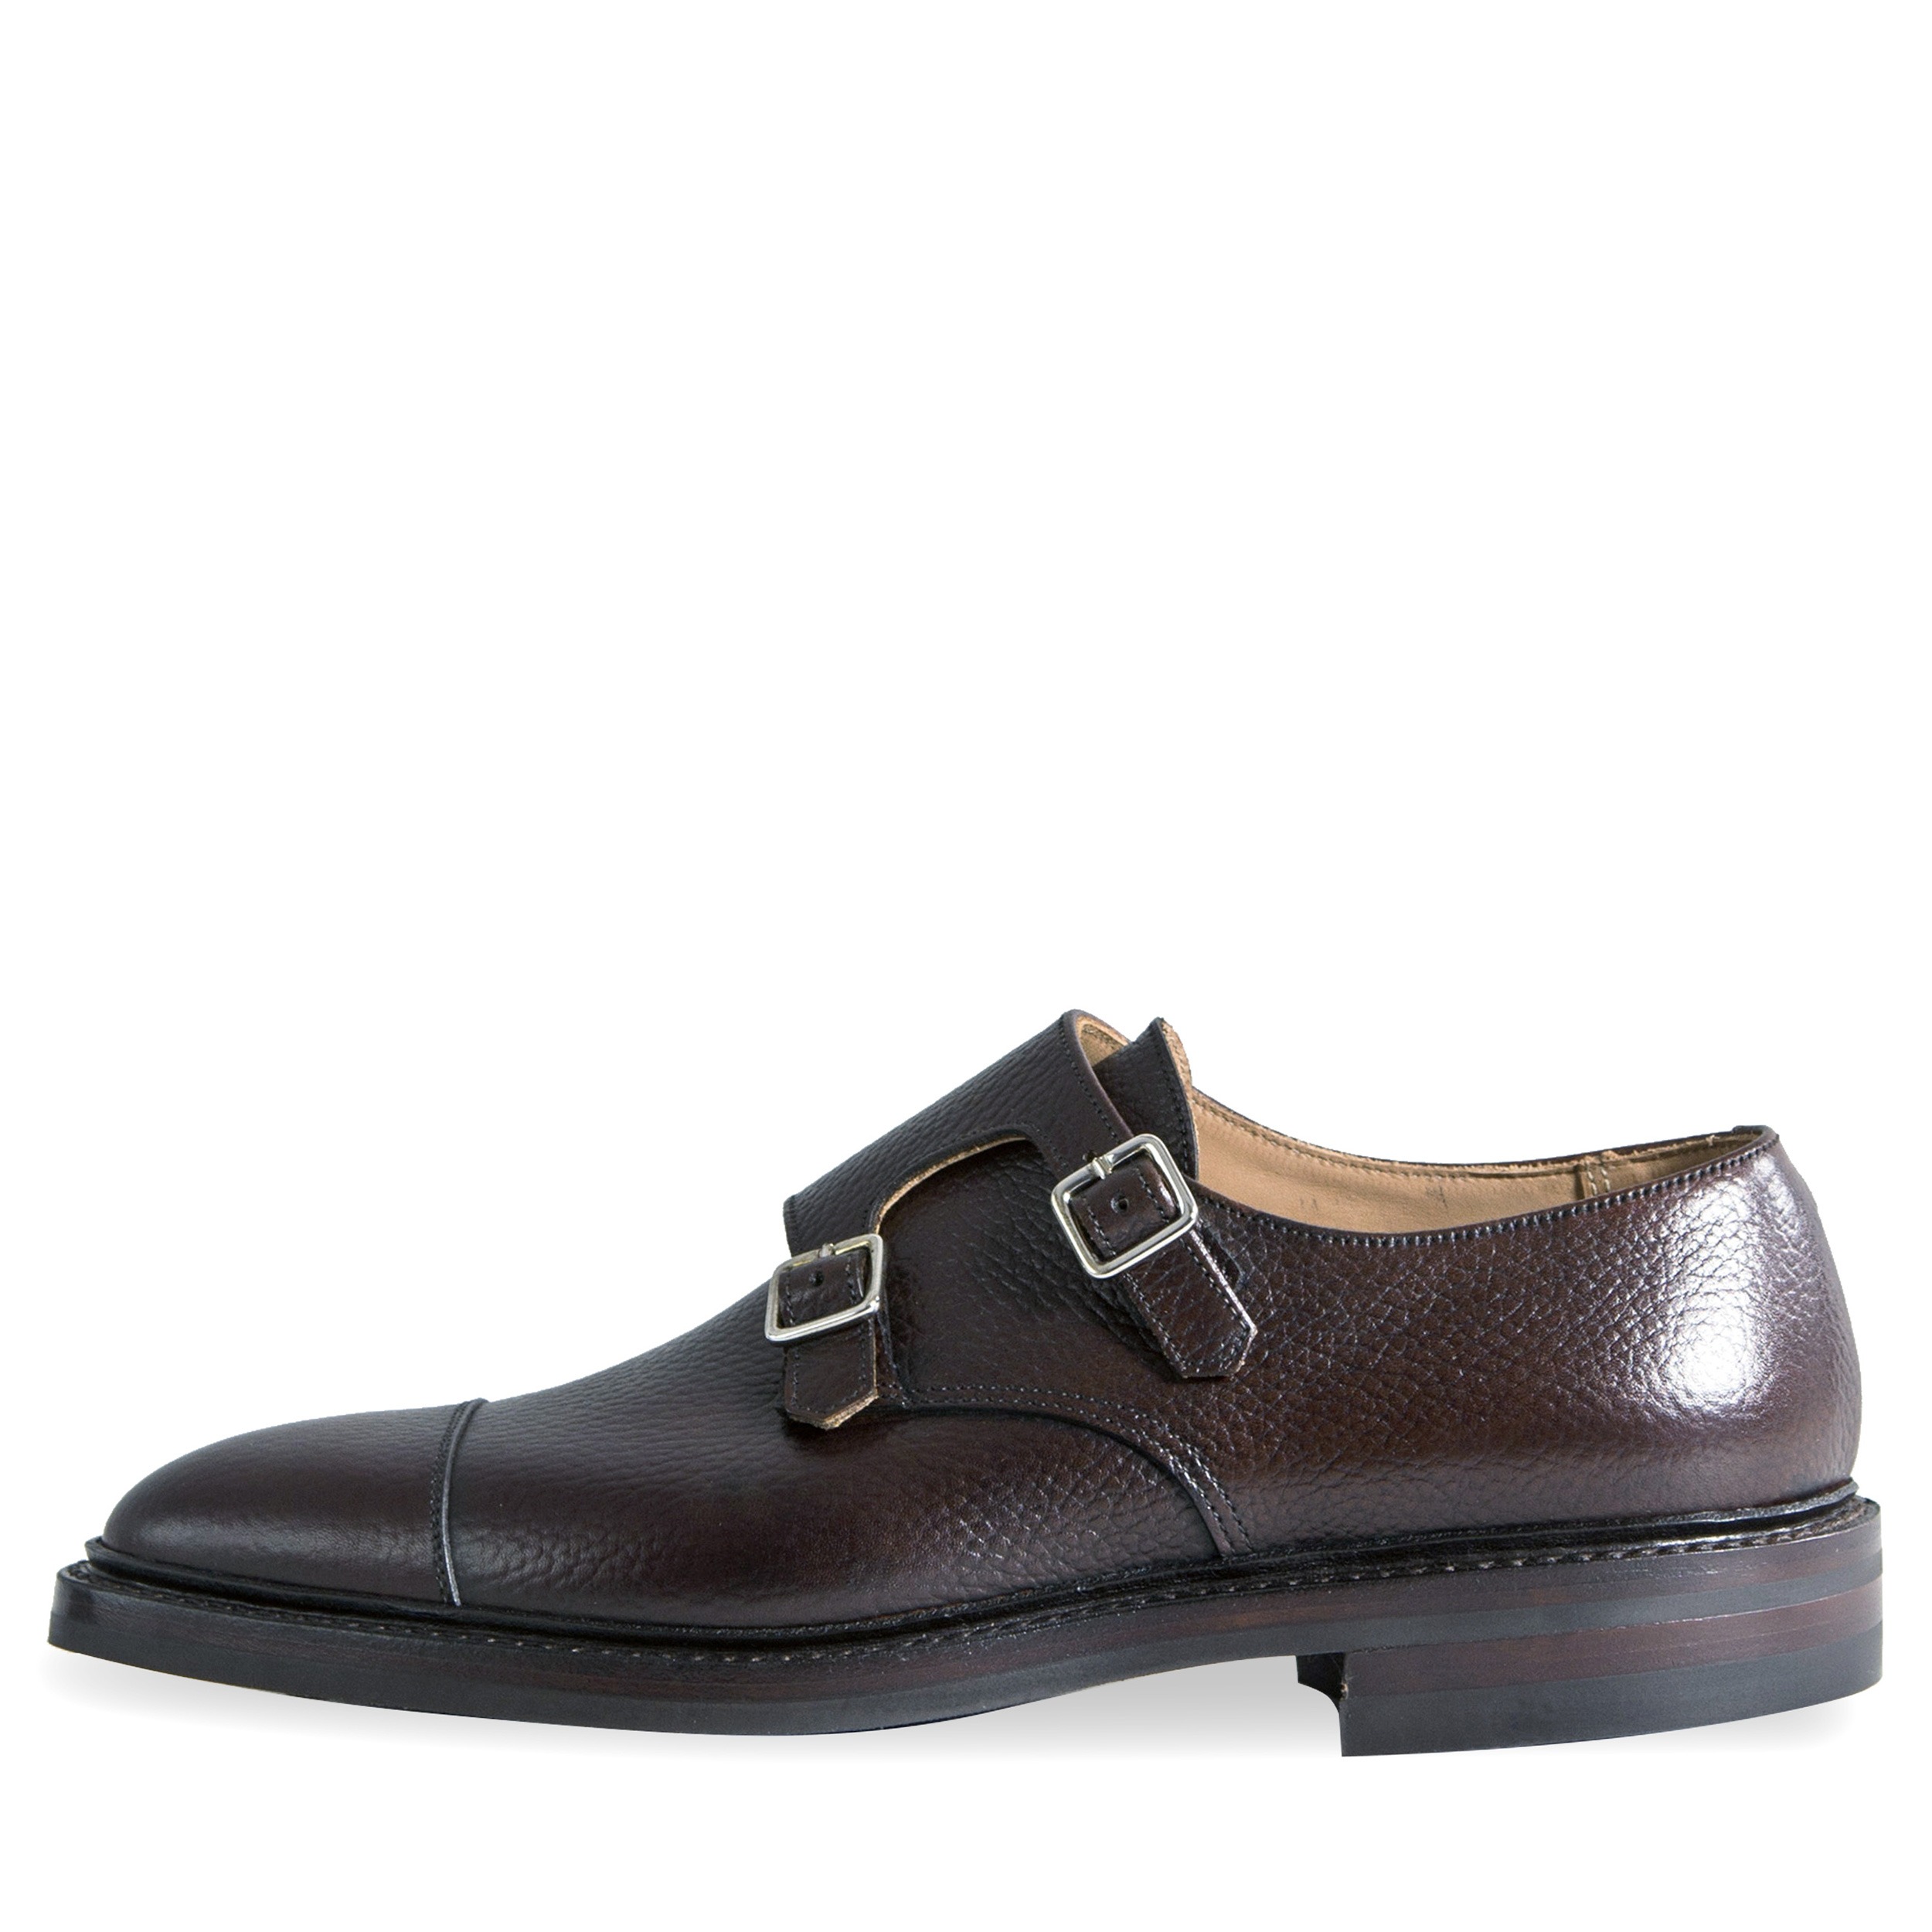 Crockett & Jones ’Harrogate’ Country Calf Grain Double Monk Shoes Dark Brown